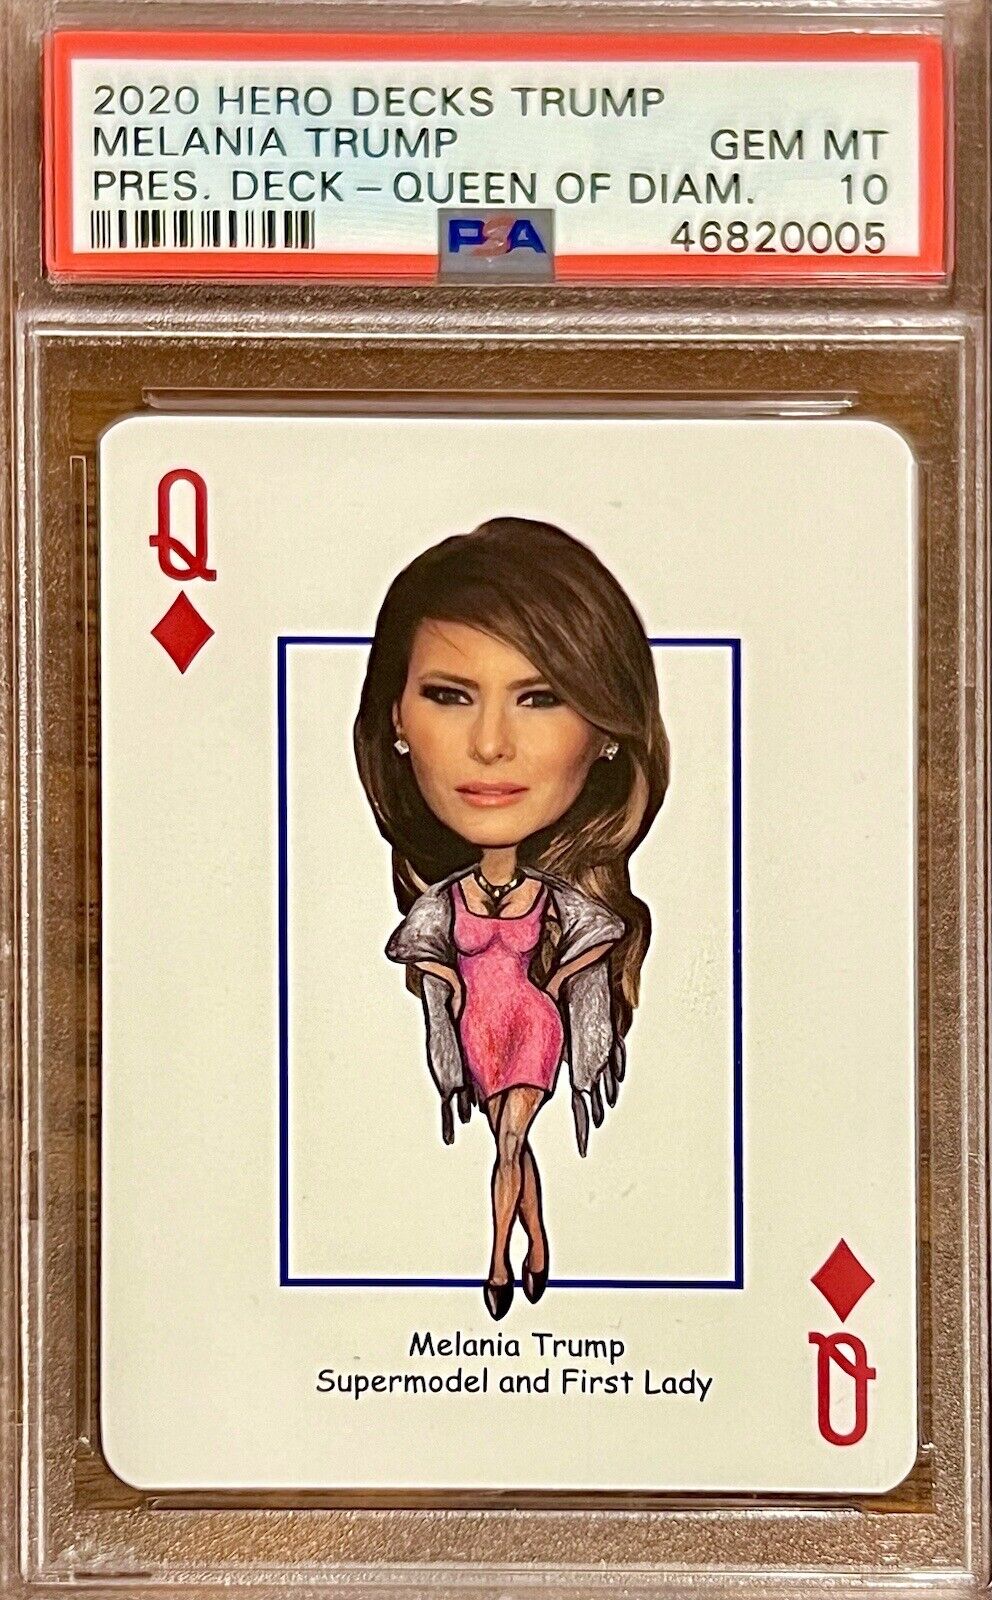 POP 4 PSA 10 Melania Trump 2020 President's Deck Supermodel and First Lady MAGA